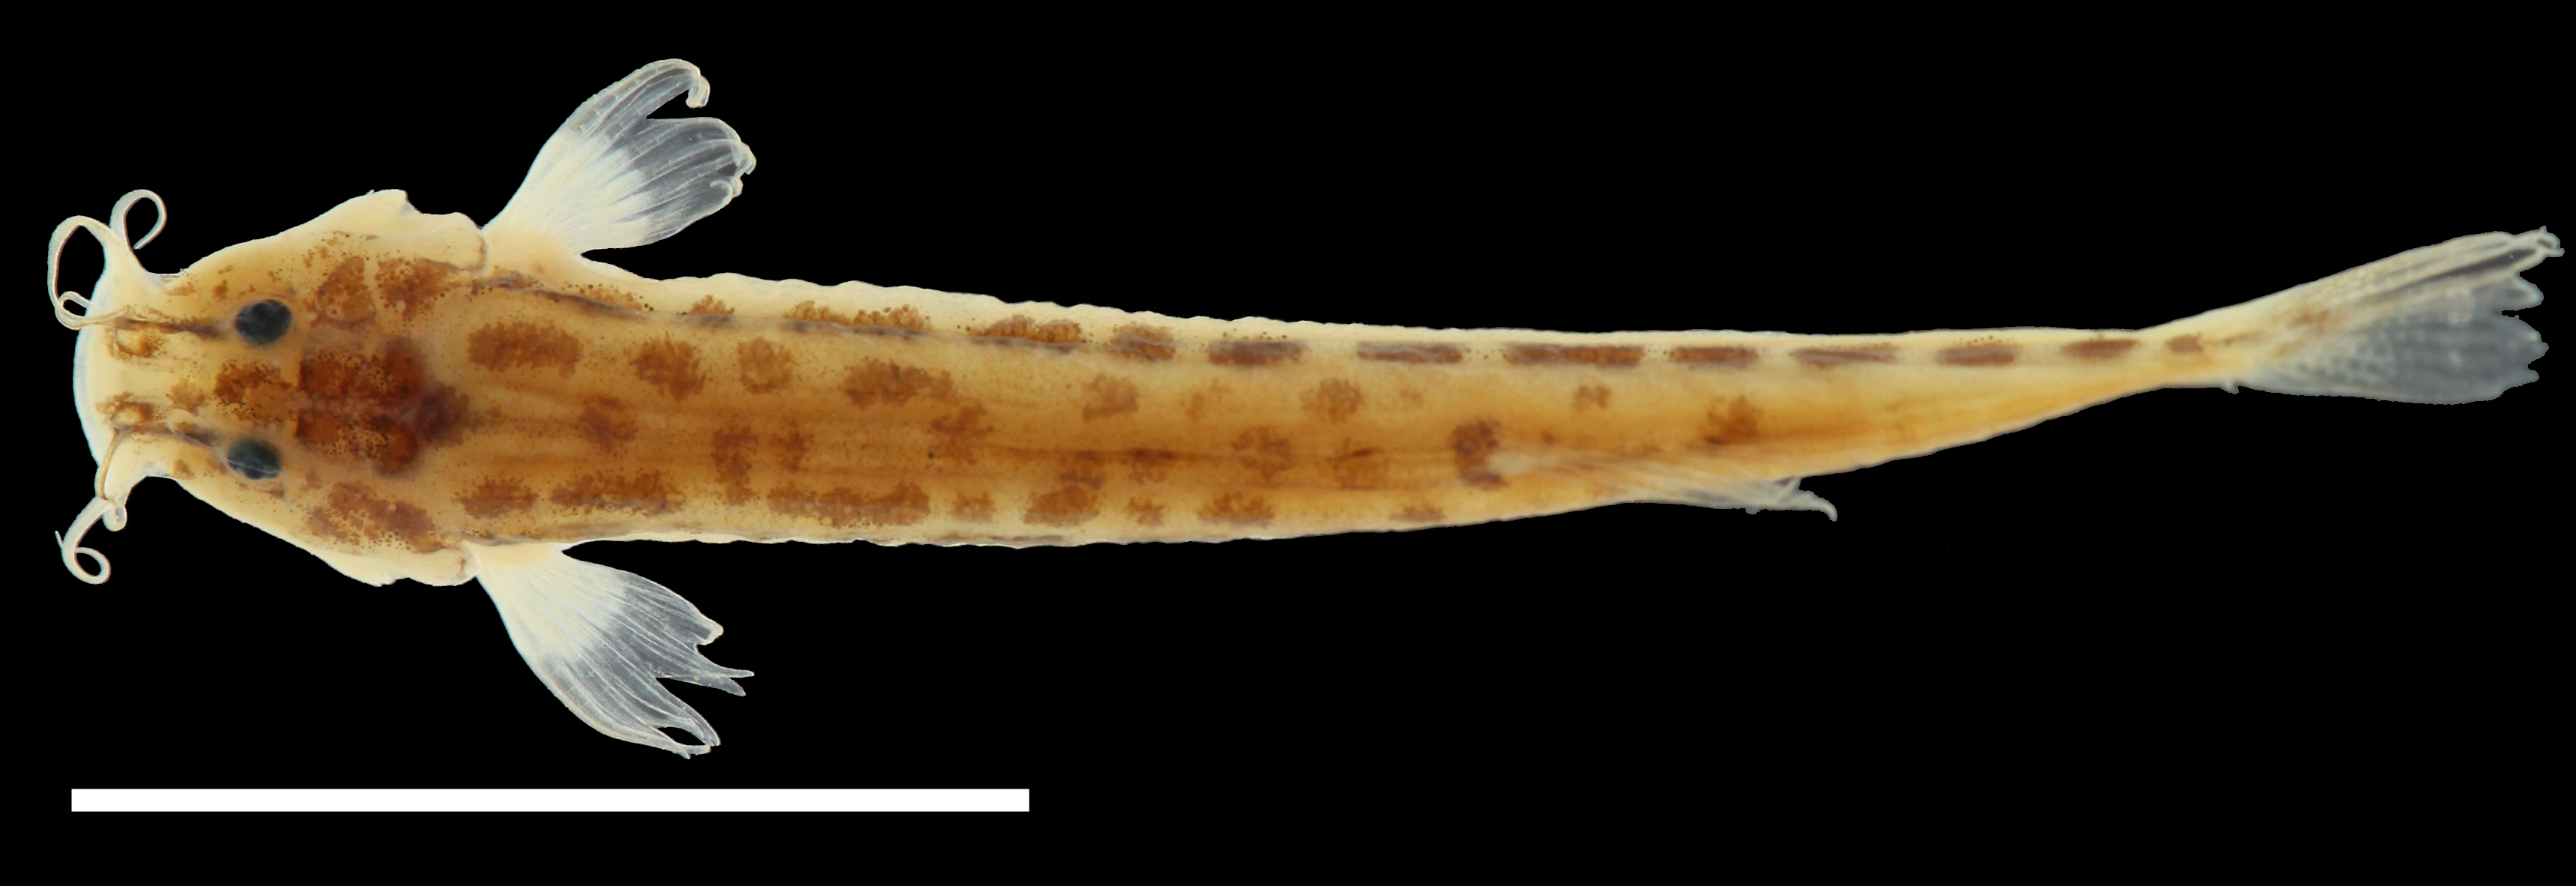 Paratype of <em>Trichomycterus maldonadoi</em>, IAvH-P-11533_Dorsal, 22.7 mm SL (scale bar = 1 cm). Photograph by C. DoNascimiento